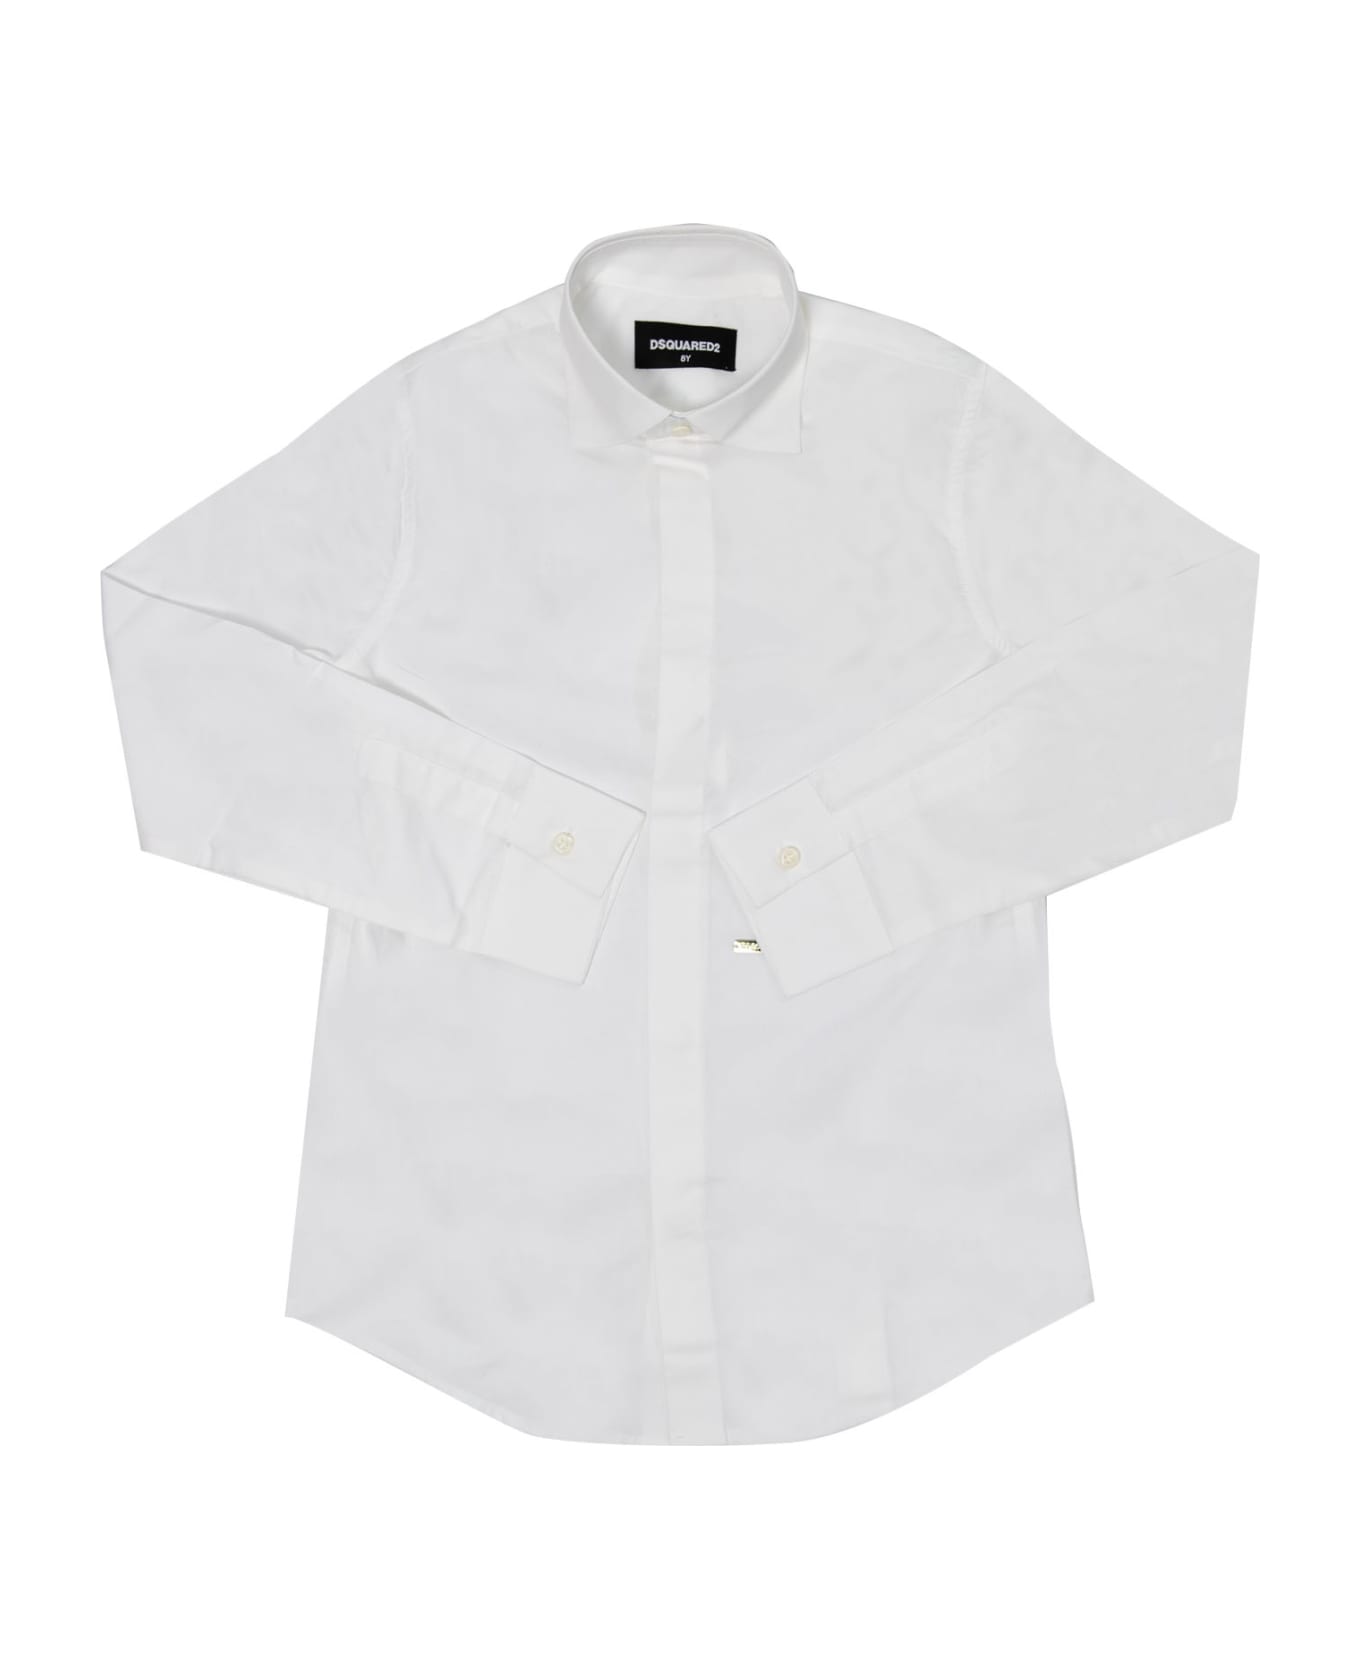 Dsquared2 Cotton Shirt - White